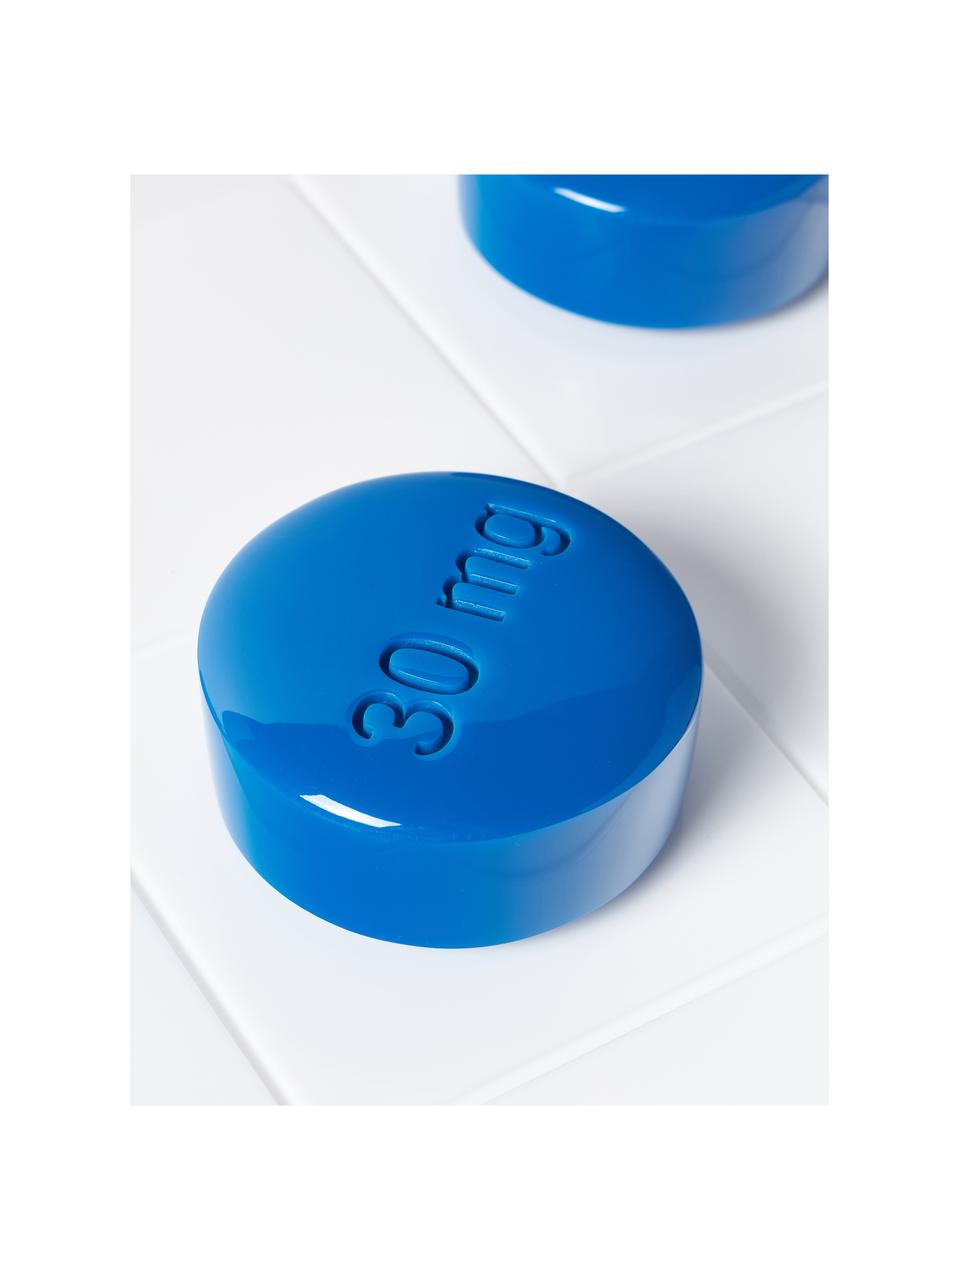 Tic-Tac-Toe Spiel Full Dose, Acryl, poliert, Weiß, Blau, Türkis, B 18 x H 10 cm